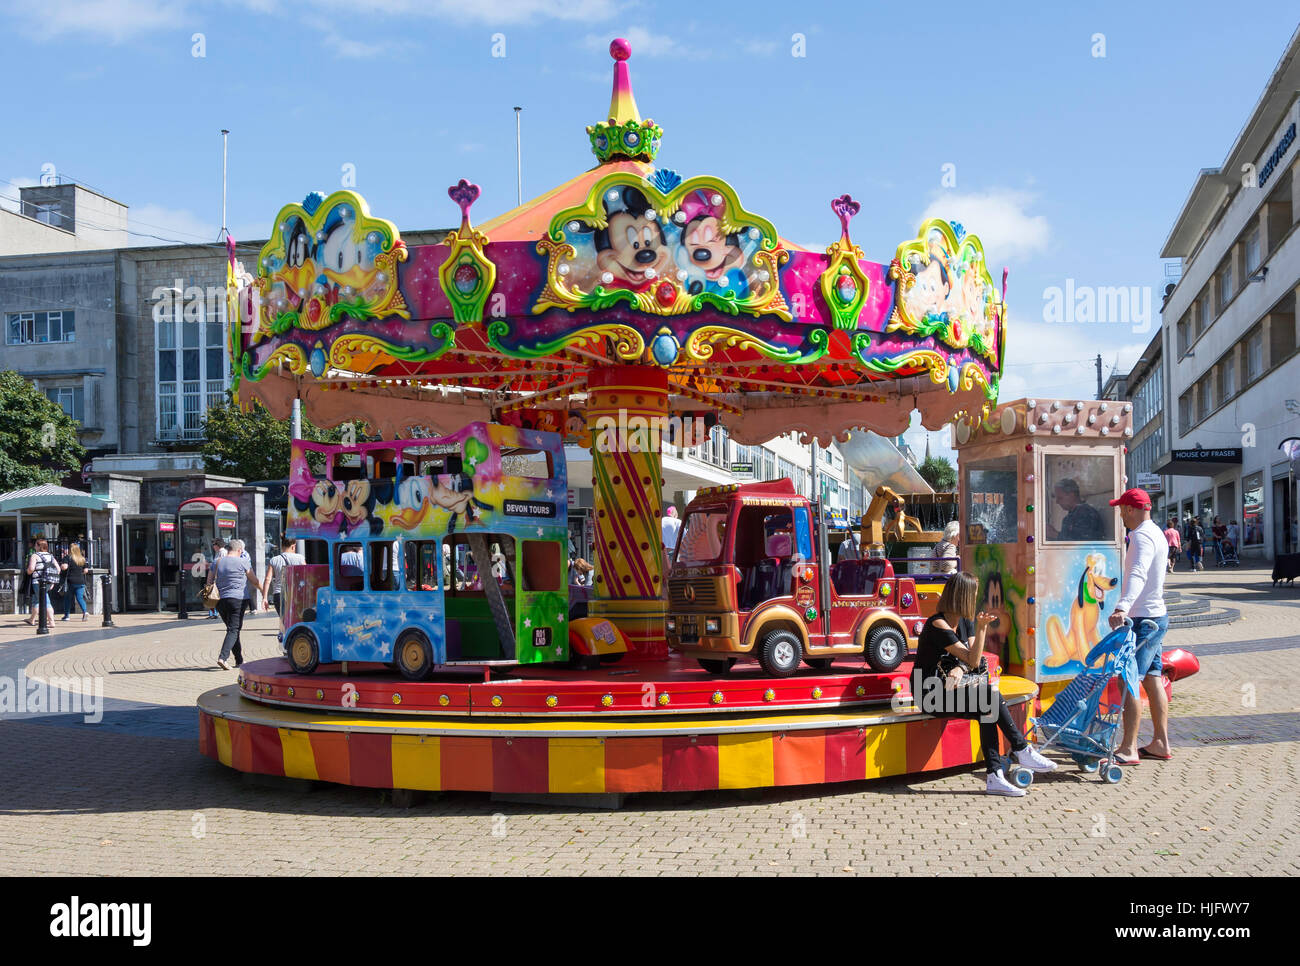 Children's carousel ride sur Armada Way, Plymouth, Devon, Angleterre, Royaume-Uni Banque D'Images